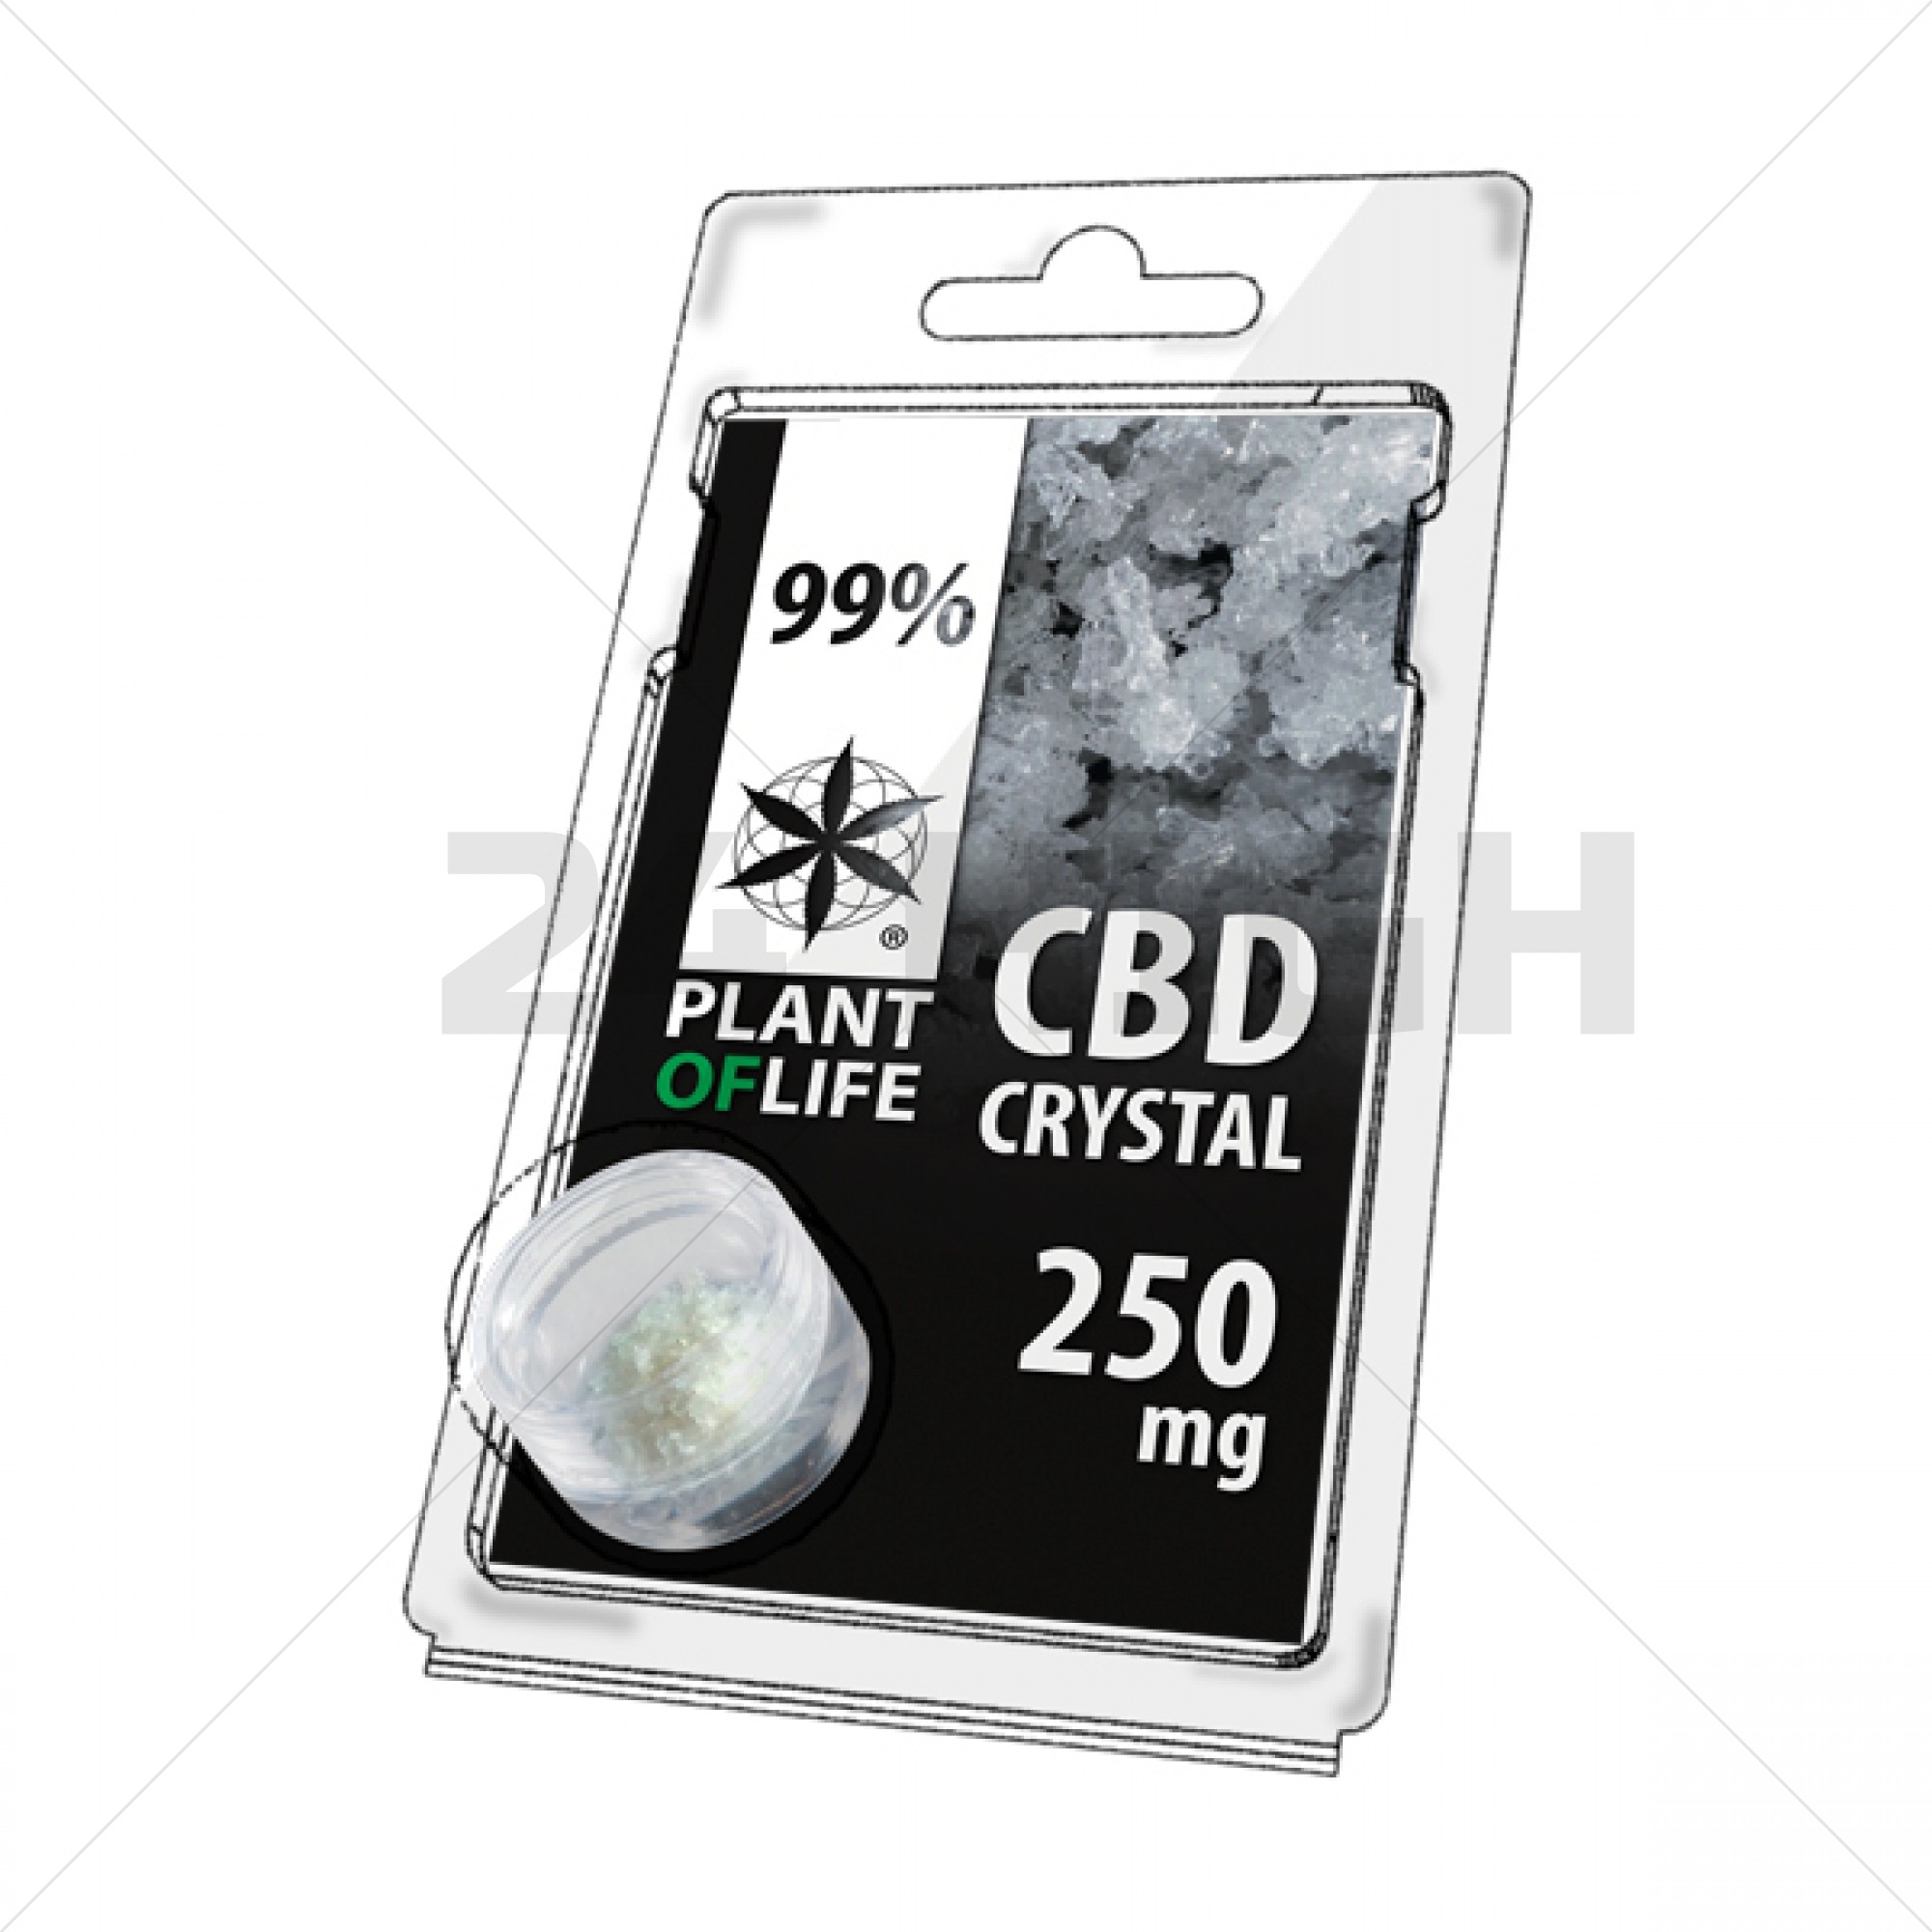 CBD Crystals 250 mg Plant Of Life